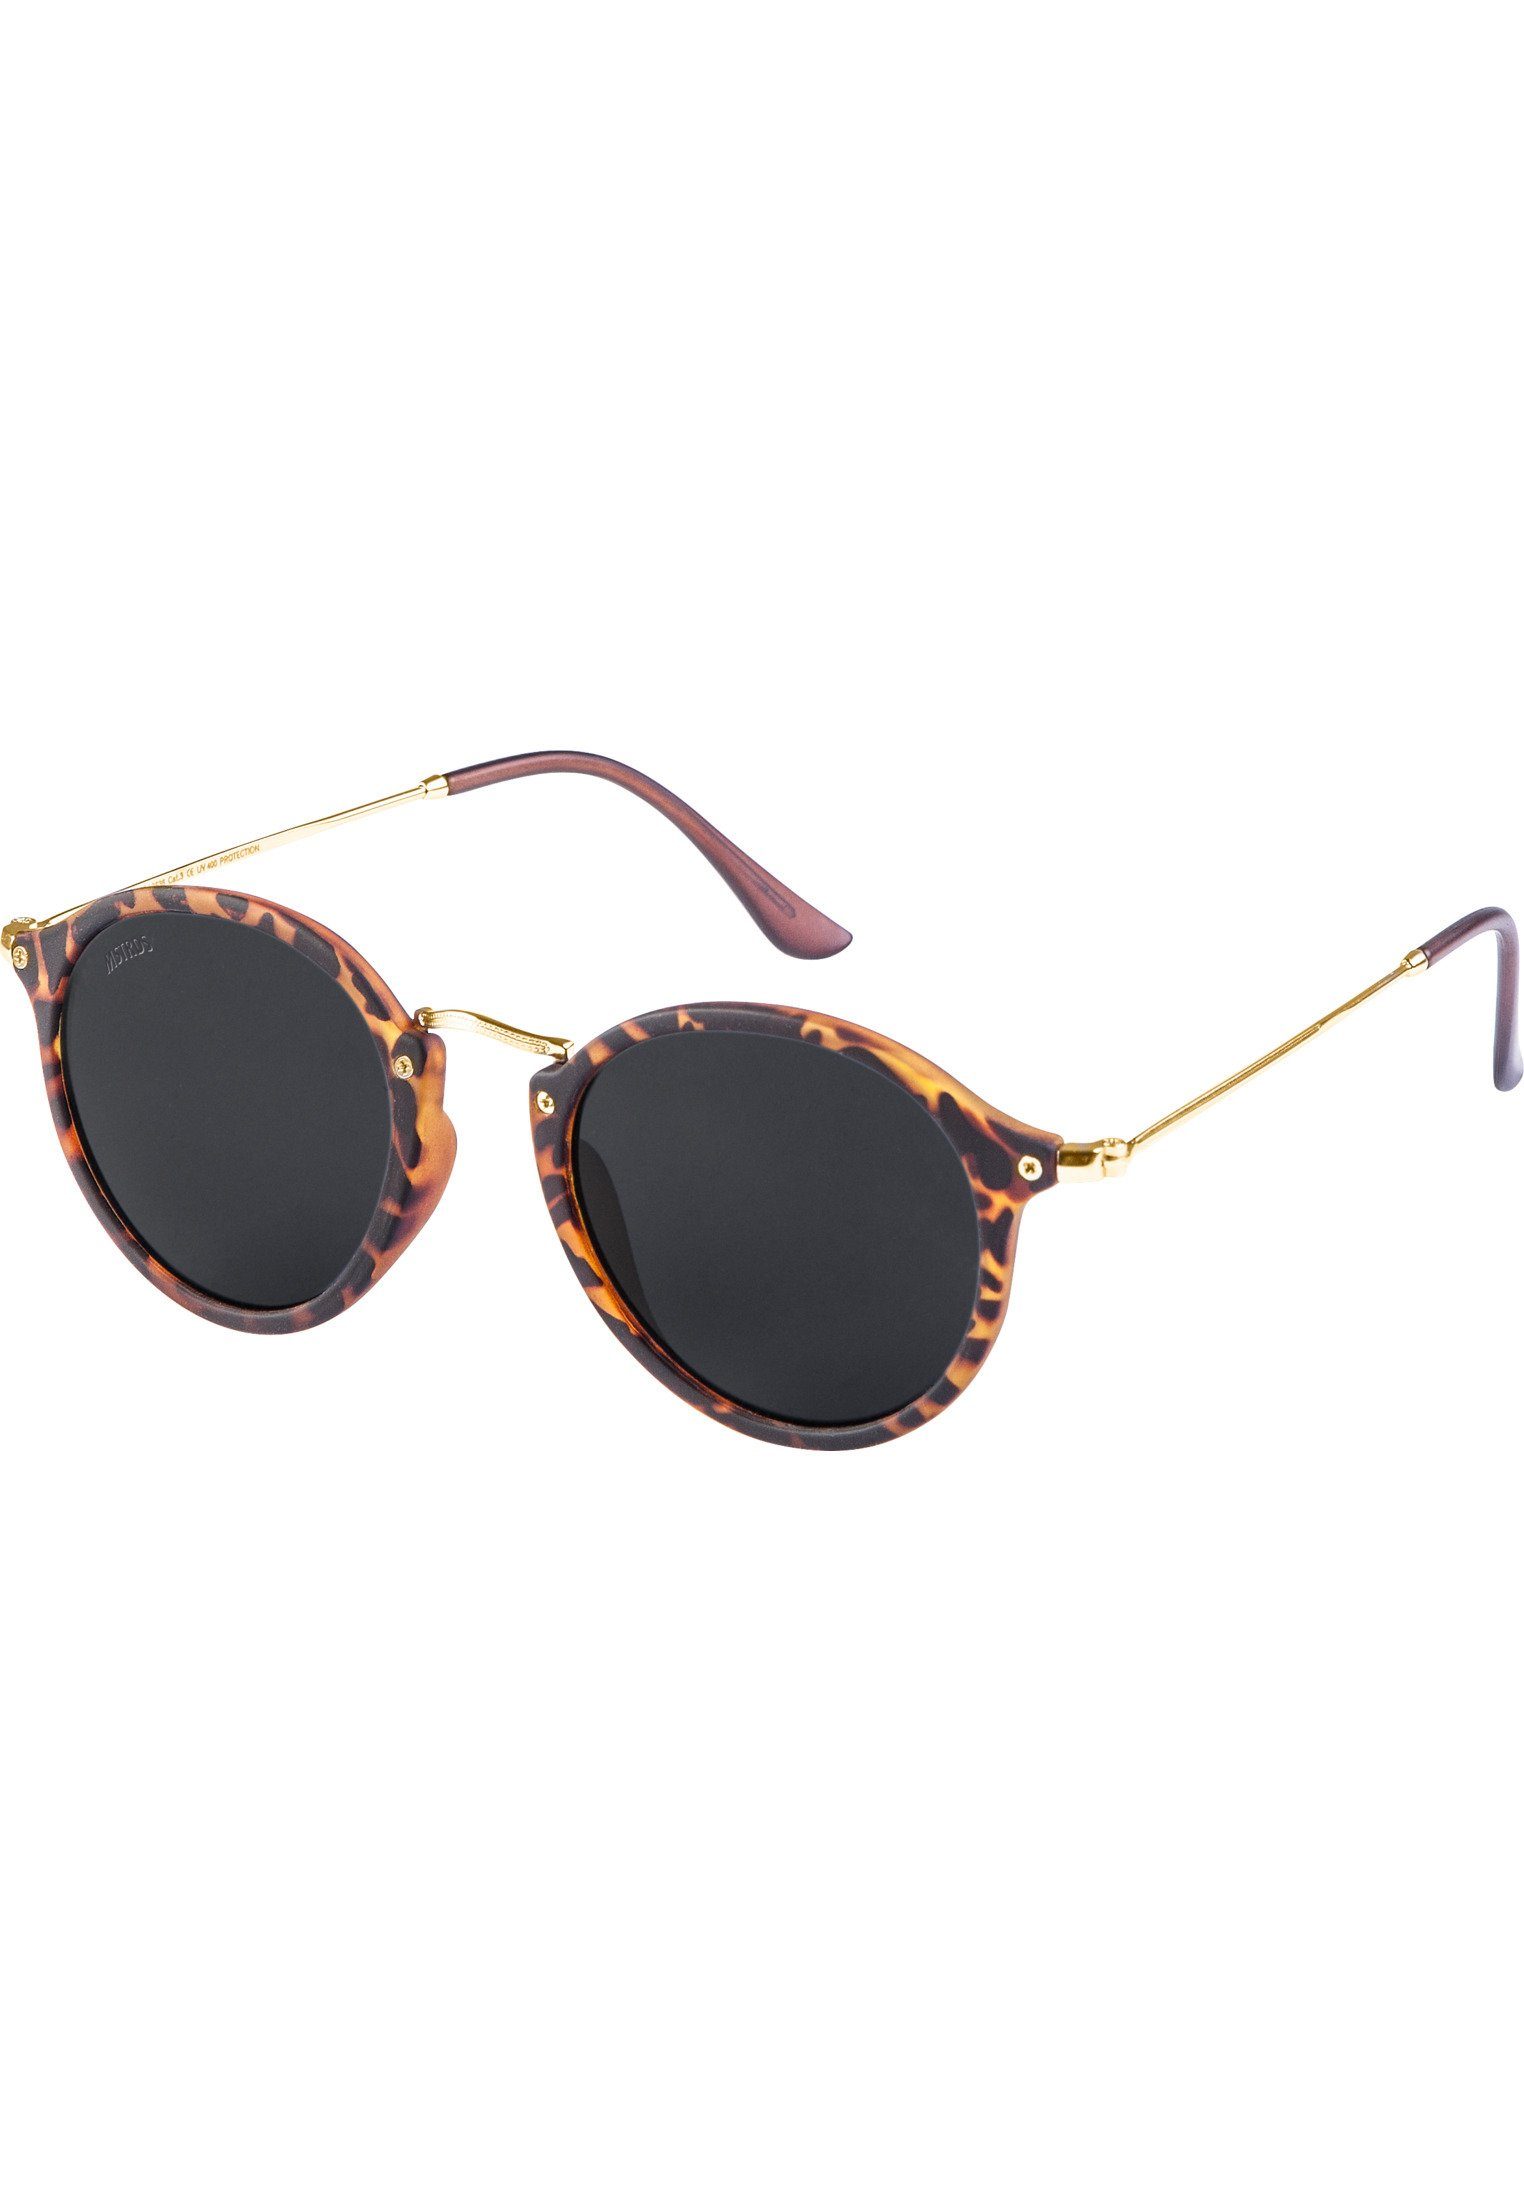 havanna/grey Sunglasses MSTRDS Sonnenbrille Spy Accessoires